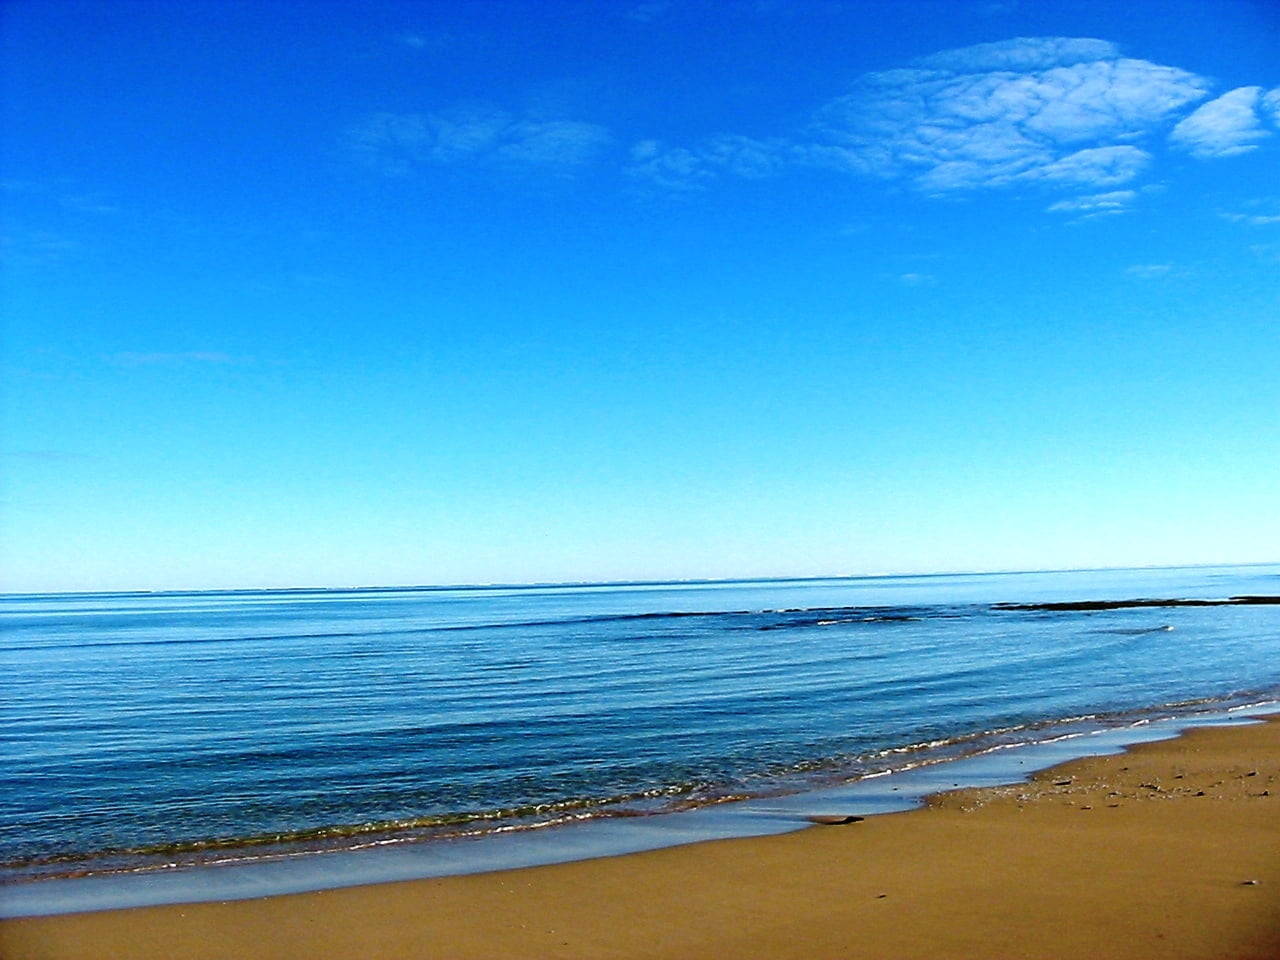 body of water under blue sky, ocean, landscape, oceania, pardoo